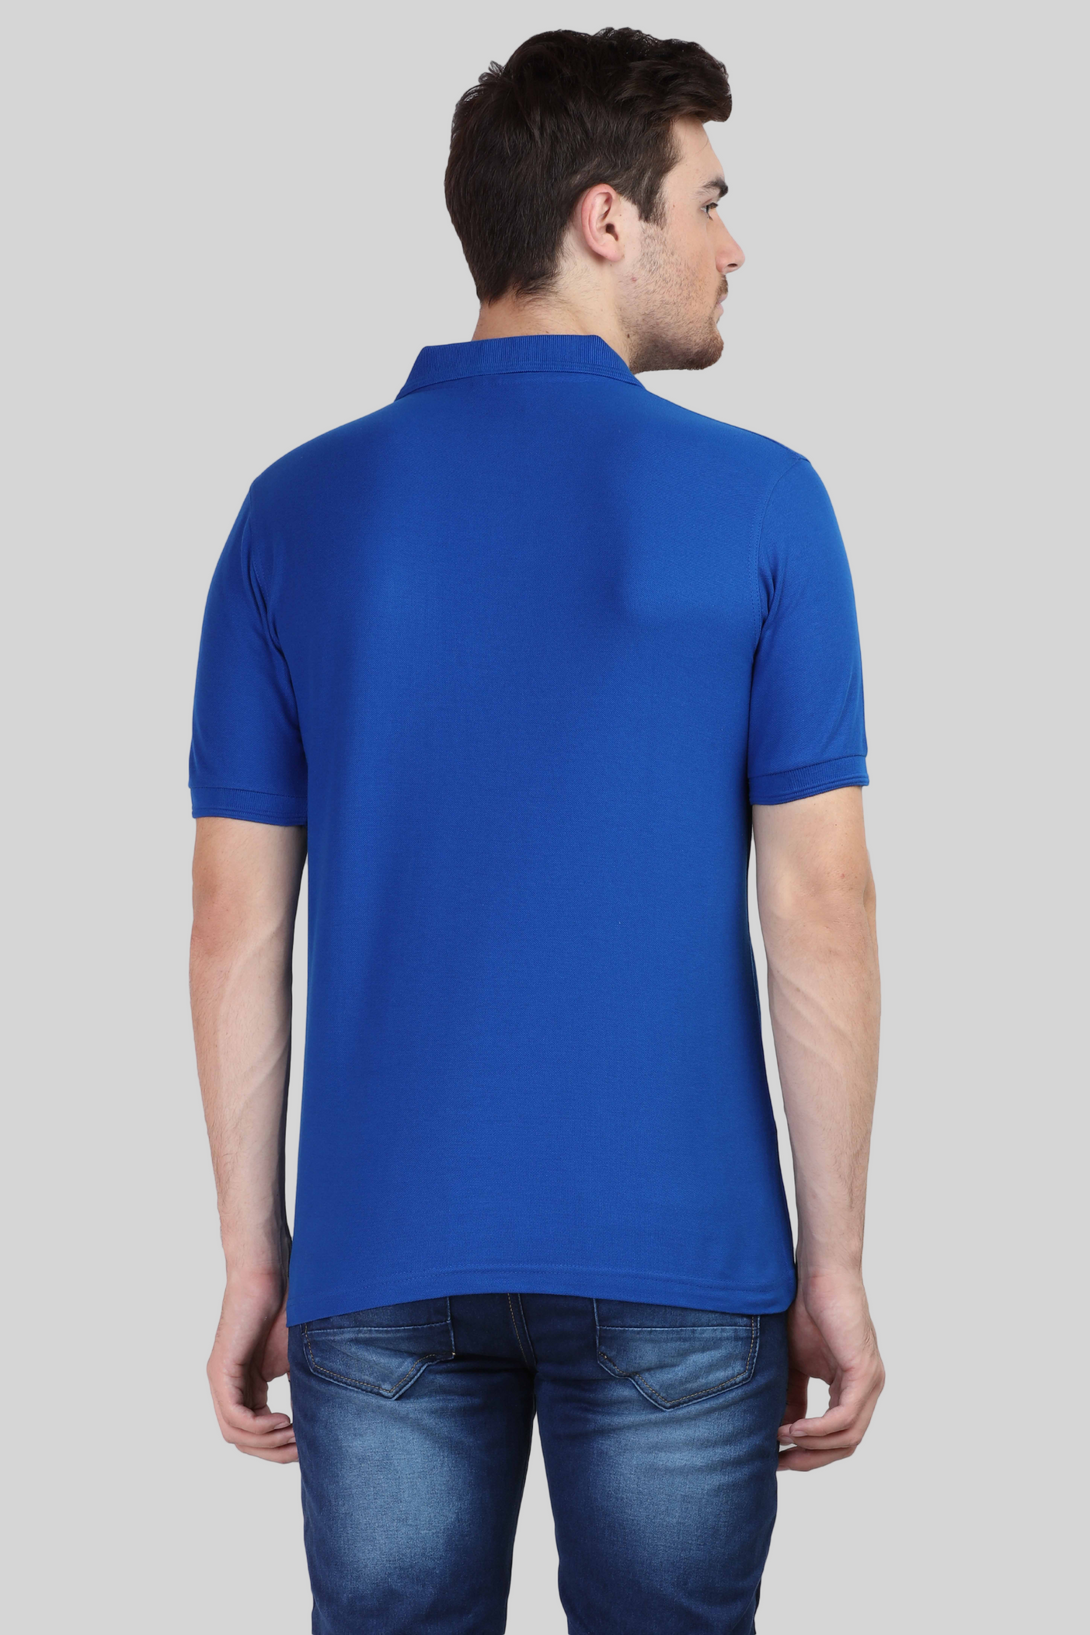 Royal Blue Polo T-Shirt For Men - WowWaves - 8